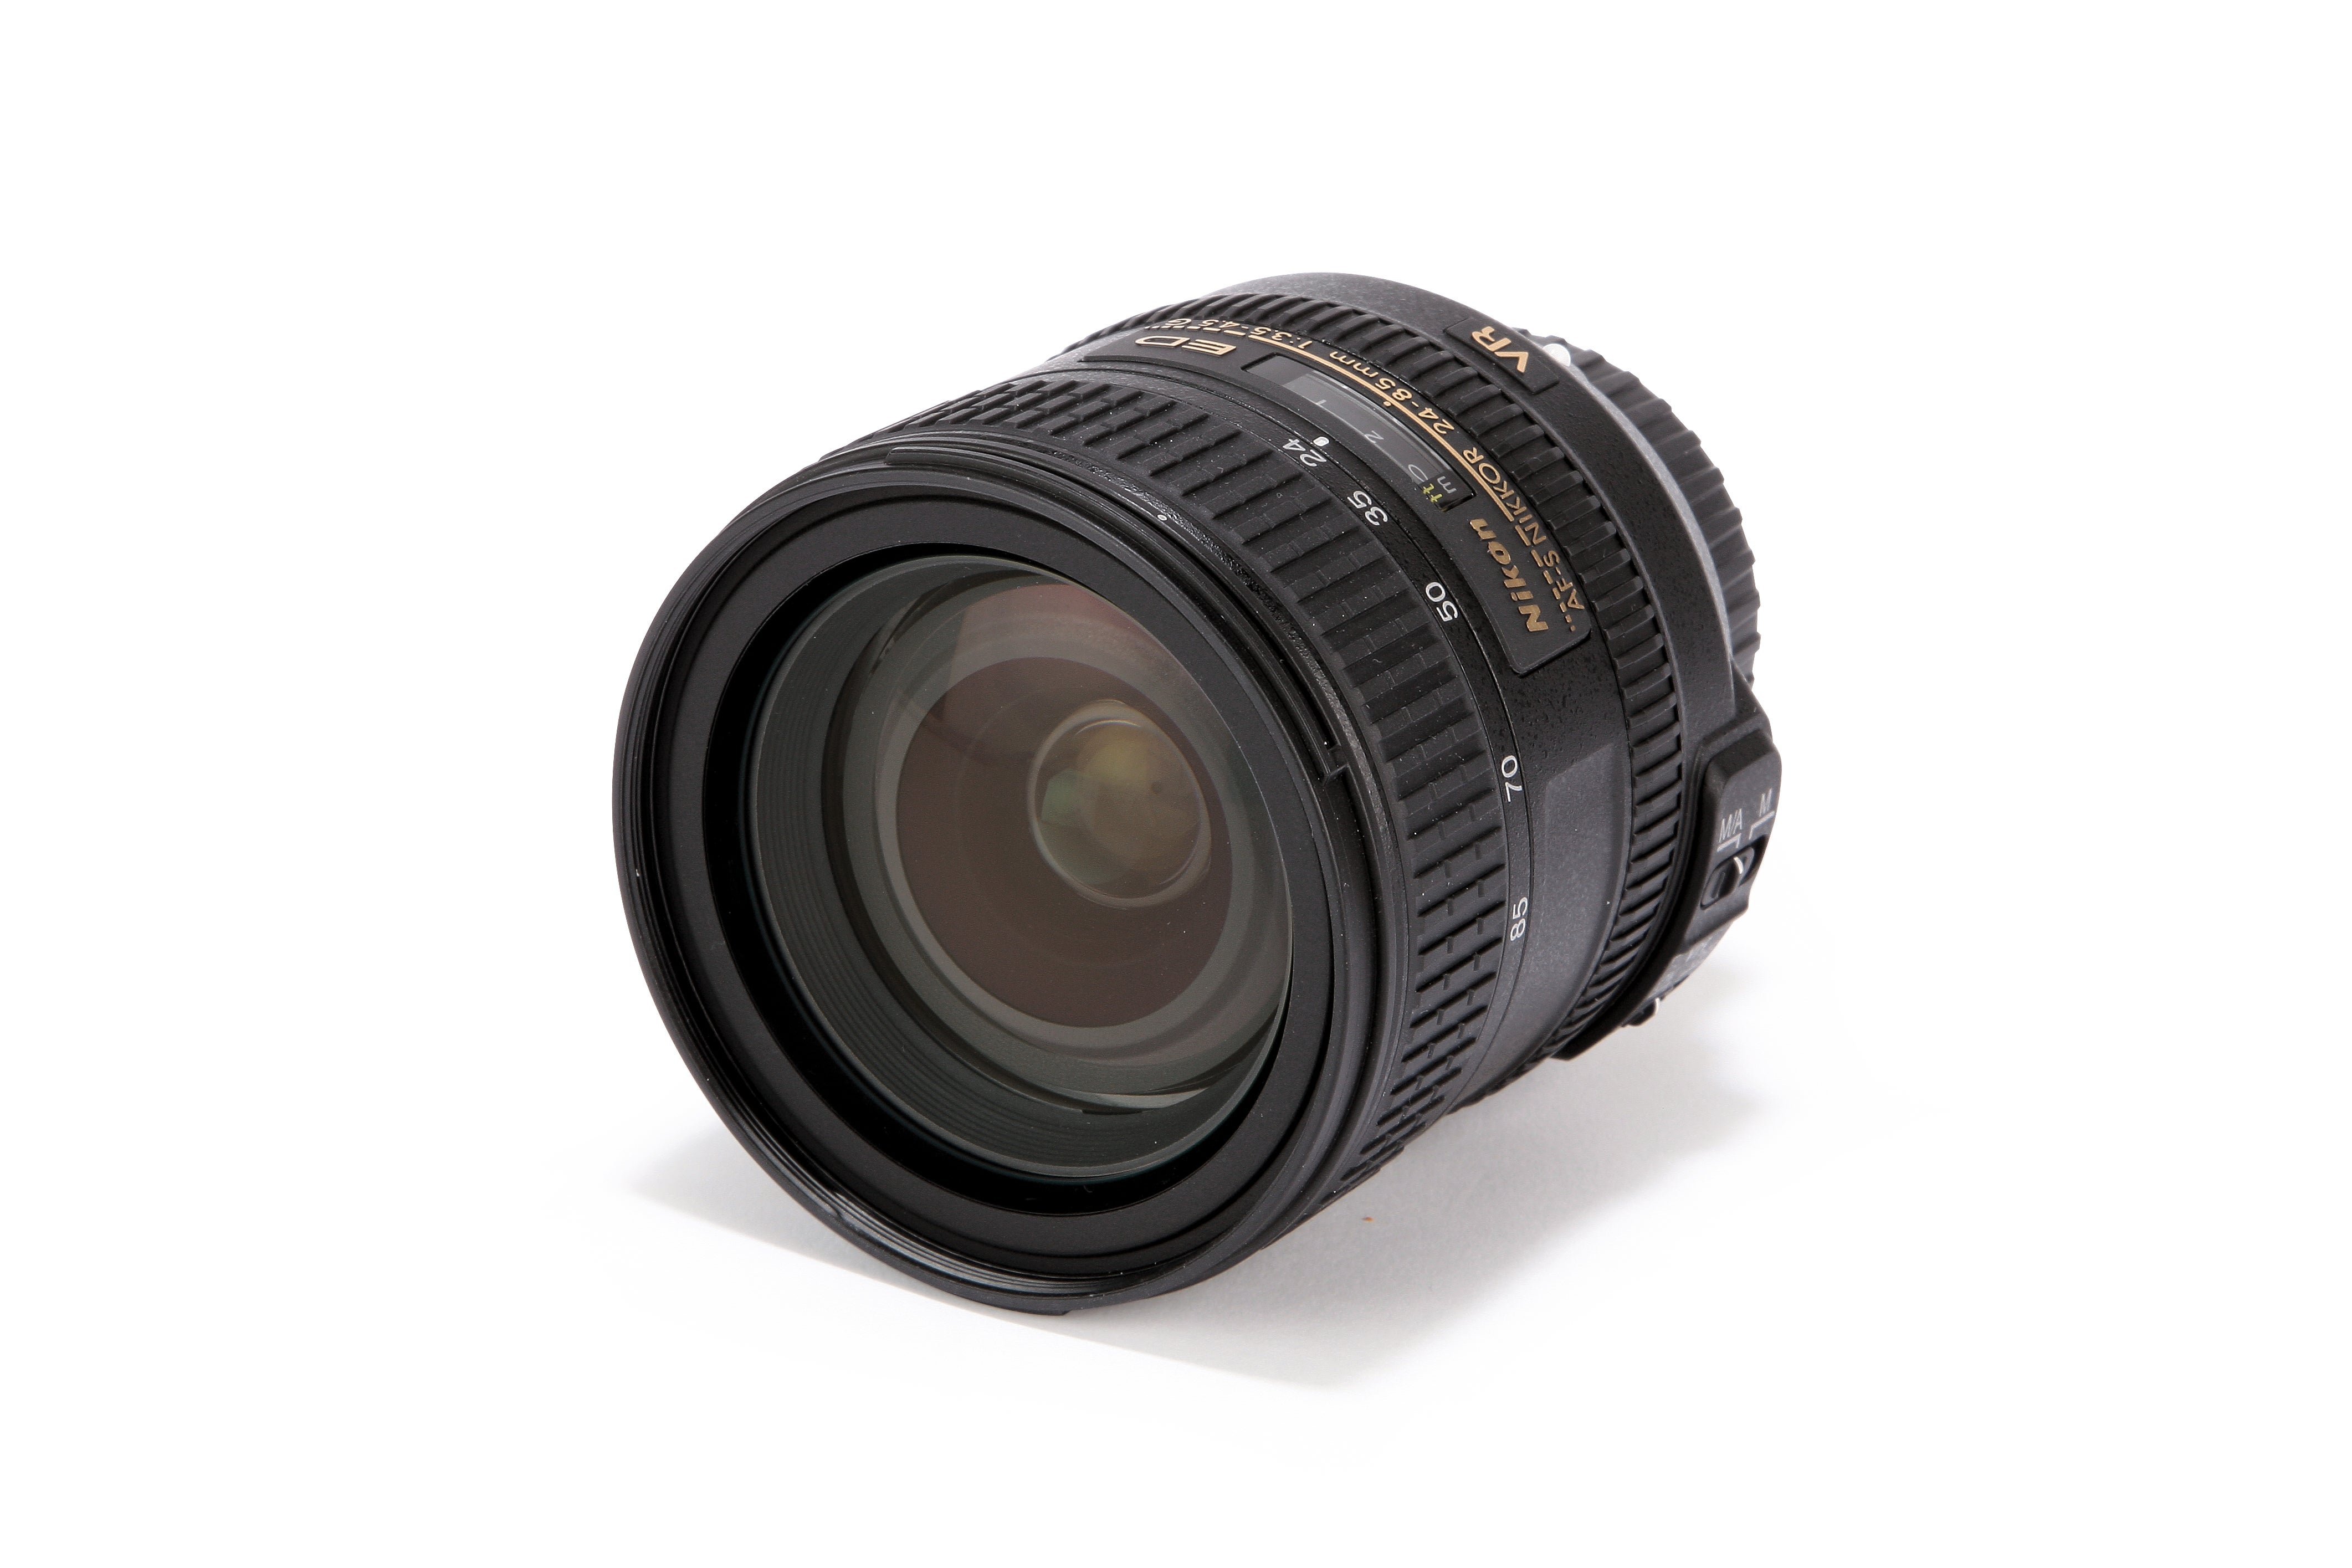 Nikon 24-85mm f/3.5-4.5G ED-IF VR review